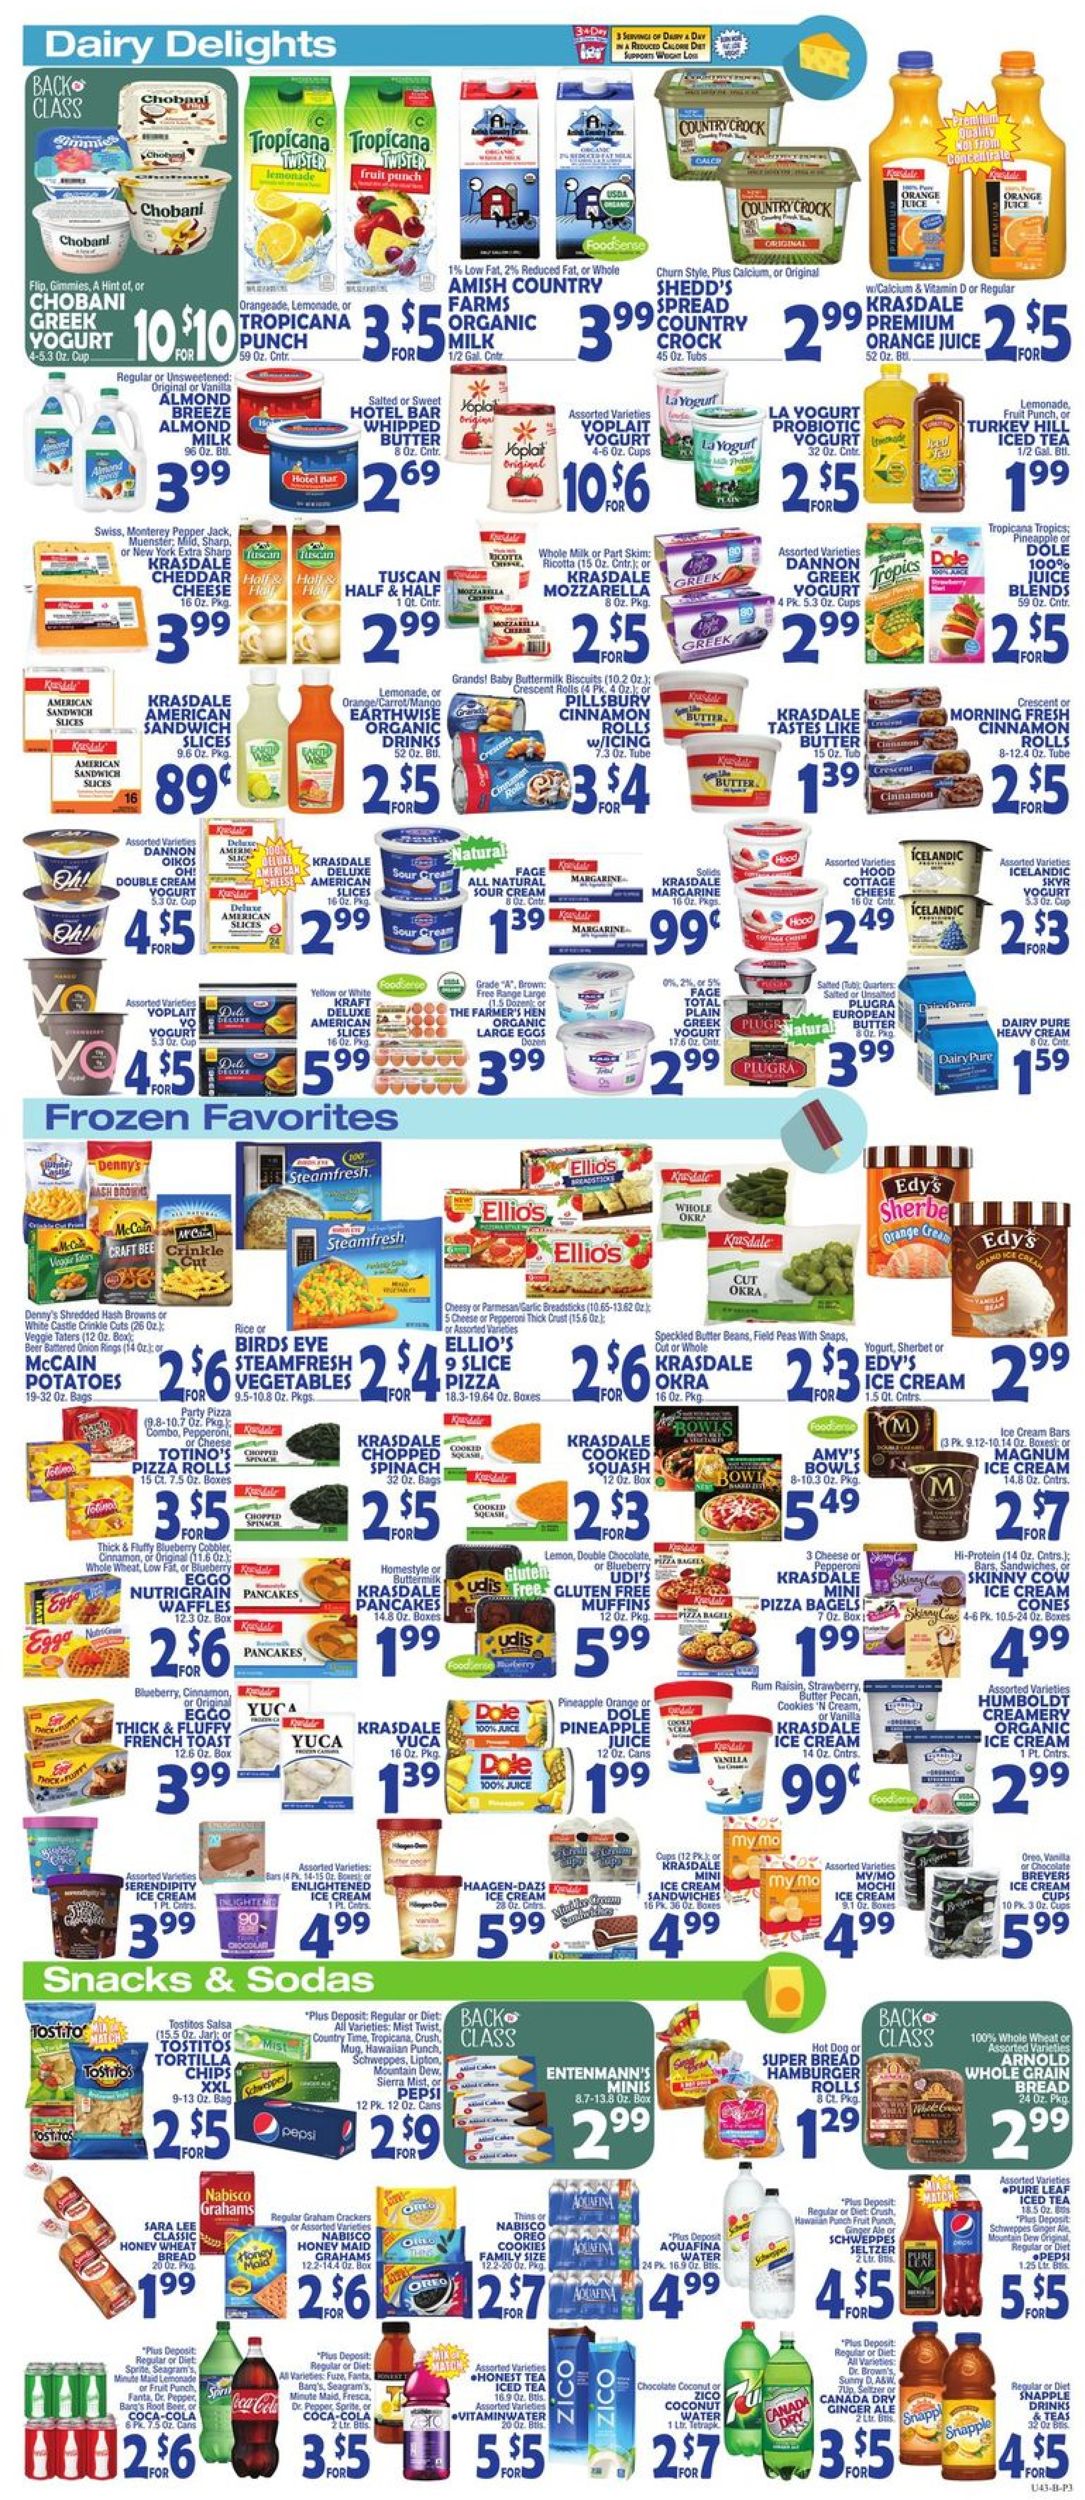 Catalogue Bravo Supermarkets from 08/16/2019